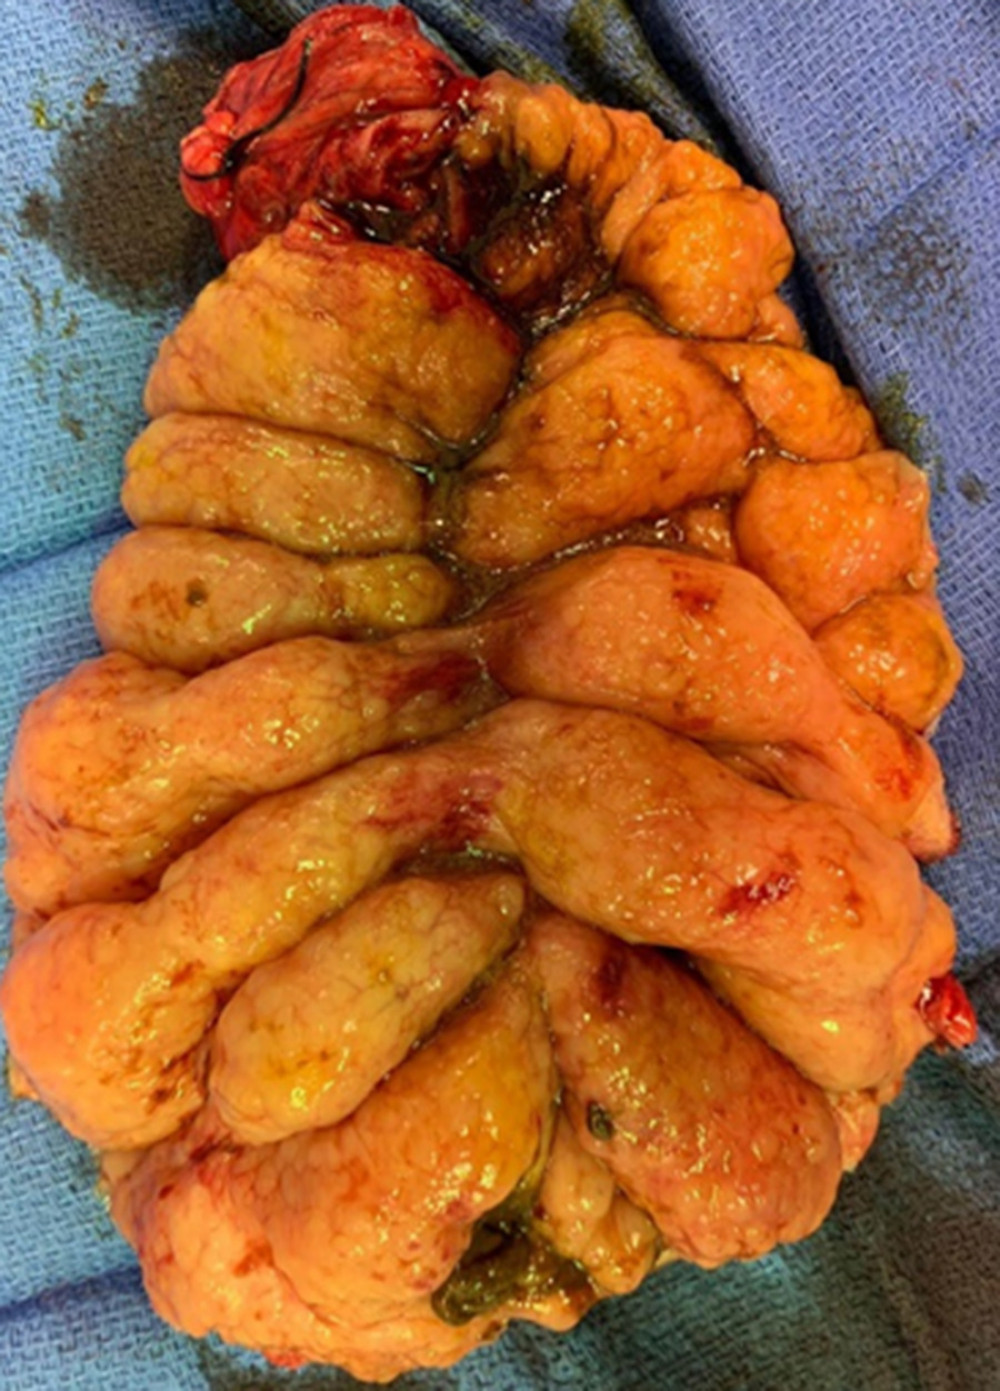 Pathology specimen – right colon opened showing multiple submucosal cysts.